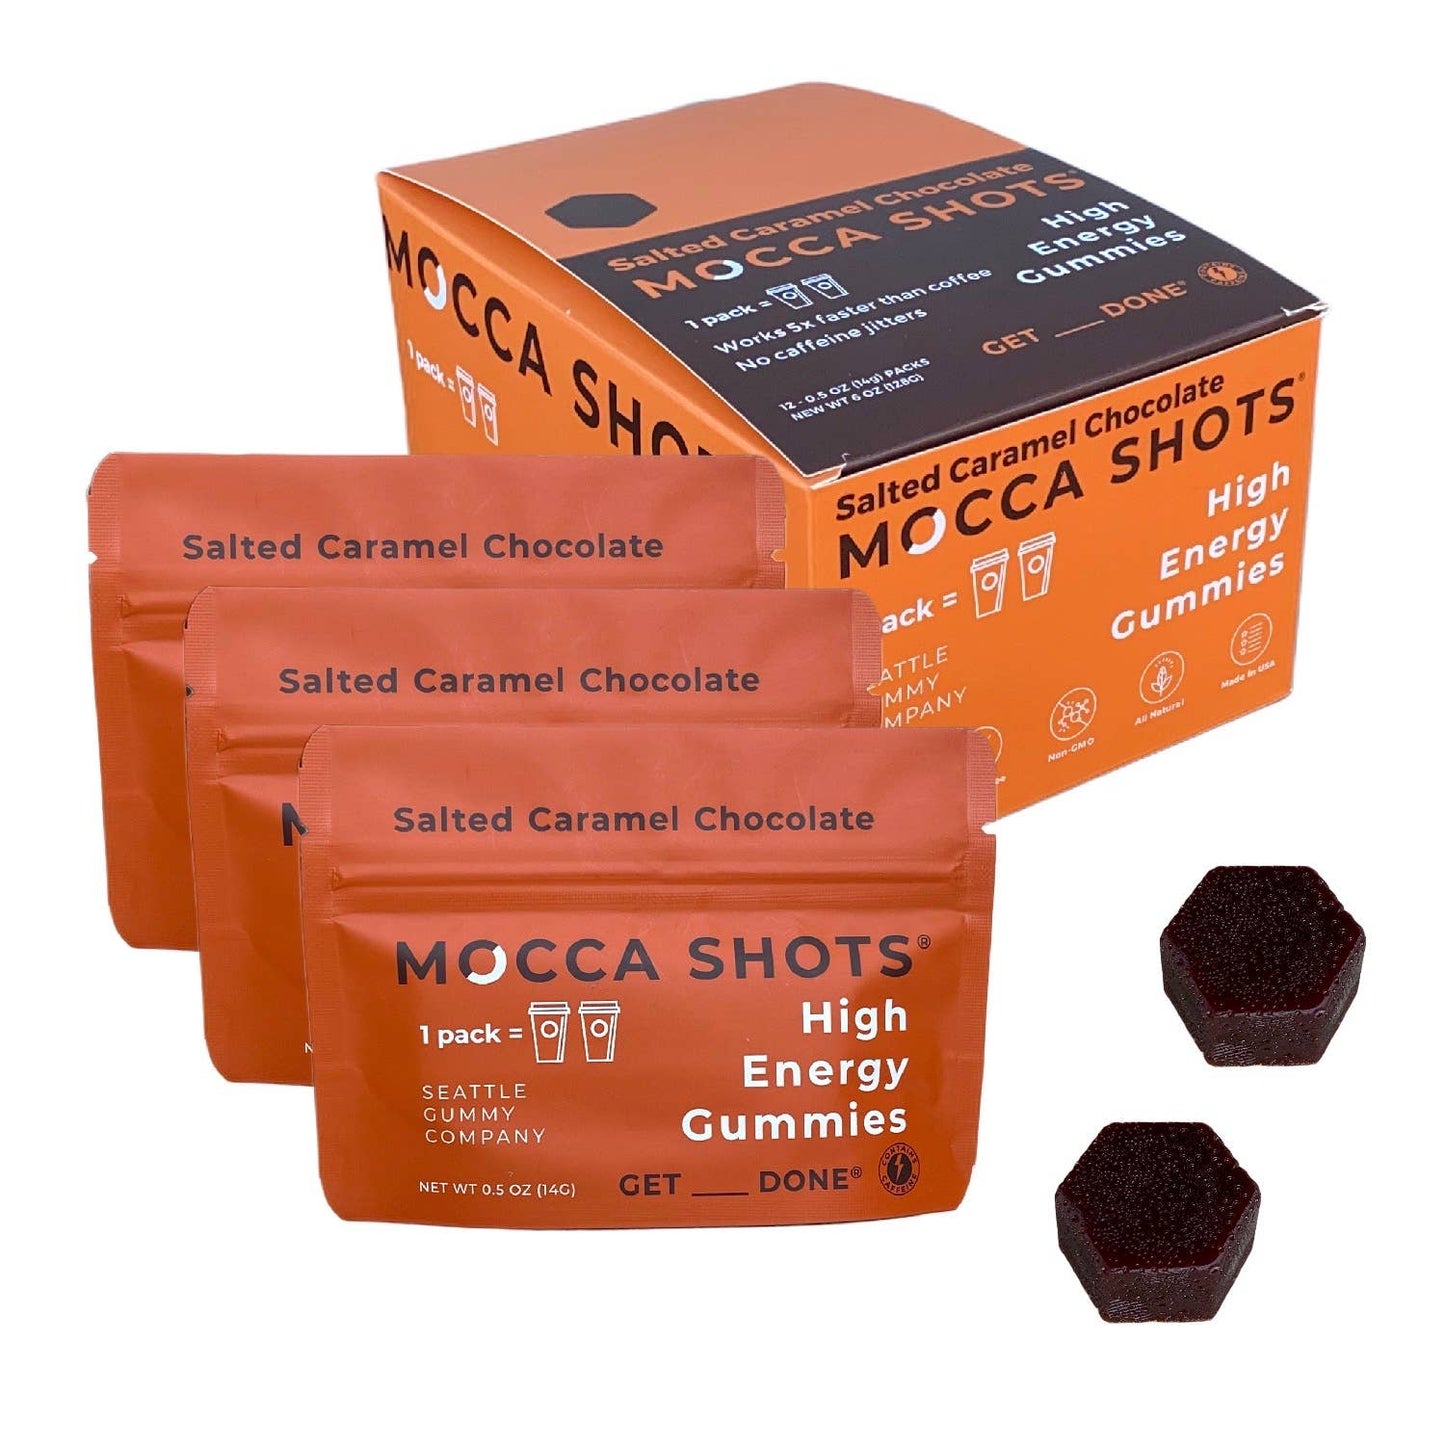 Mocca Shots Salted Caramel Chocolate Caffeine Gummy |12-Pack